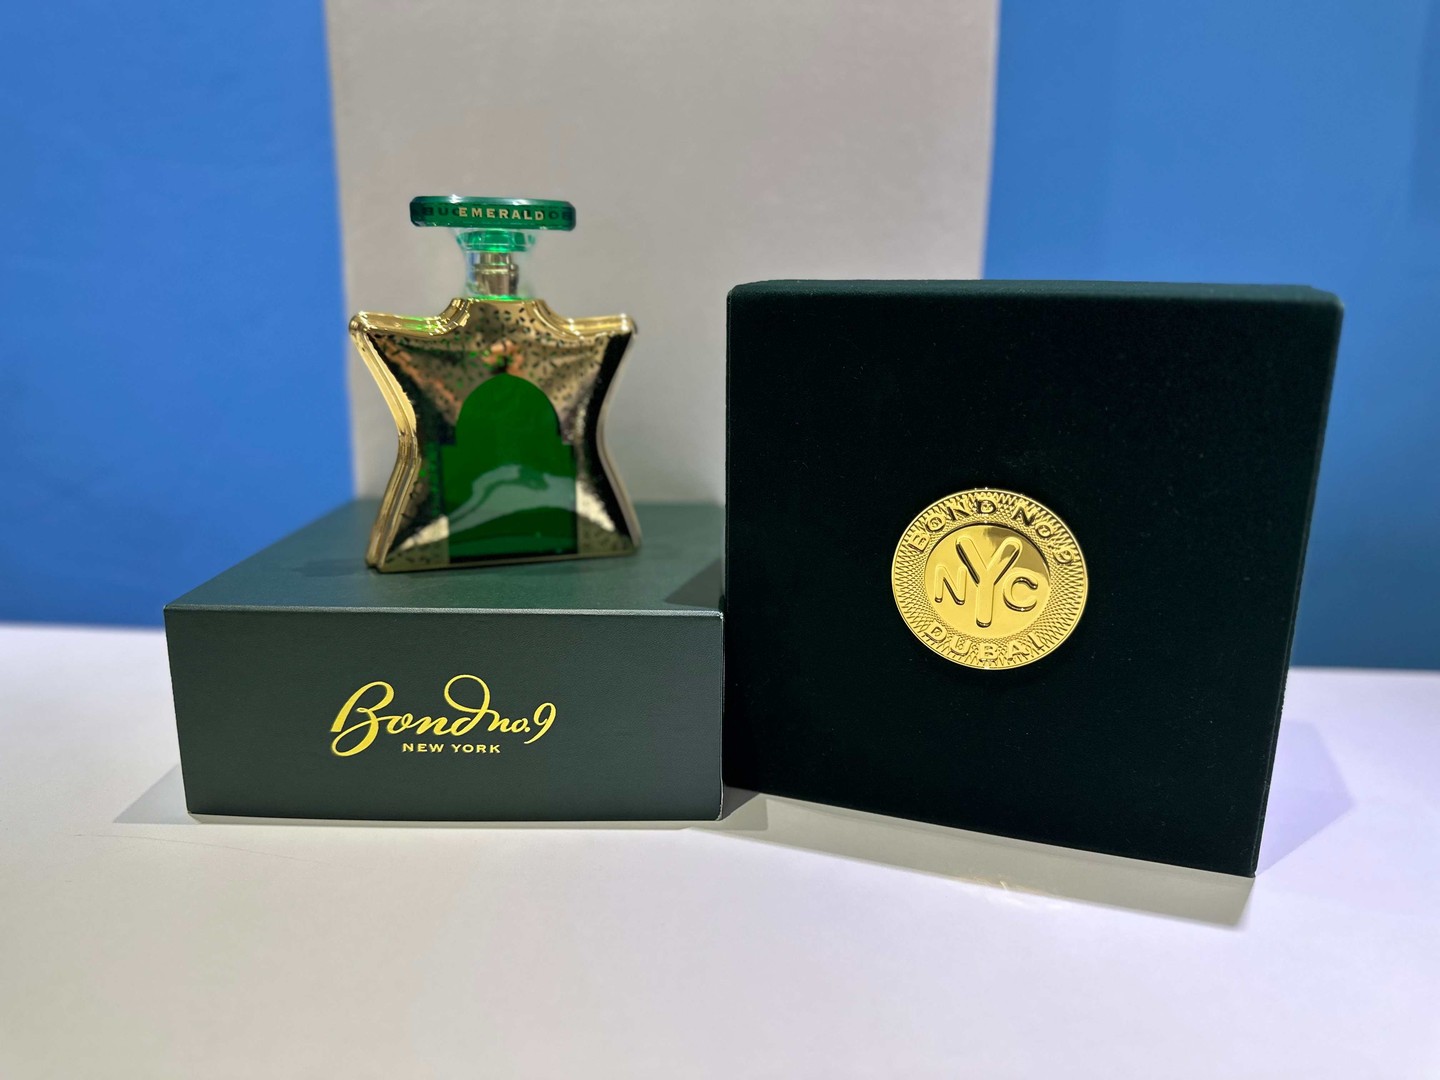 joyas, relojes y accesorios - Vendo Perfume Bond NO.9 DUBAI EMERALD 100ML Nuevo, Original, RD$ 19,500 NEG 3